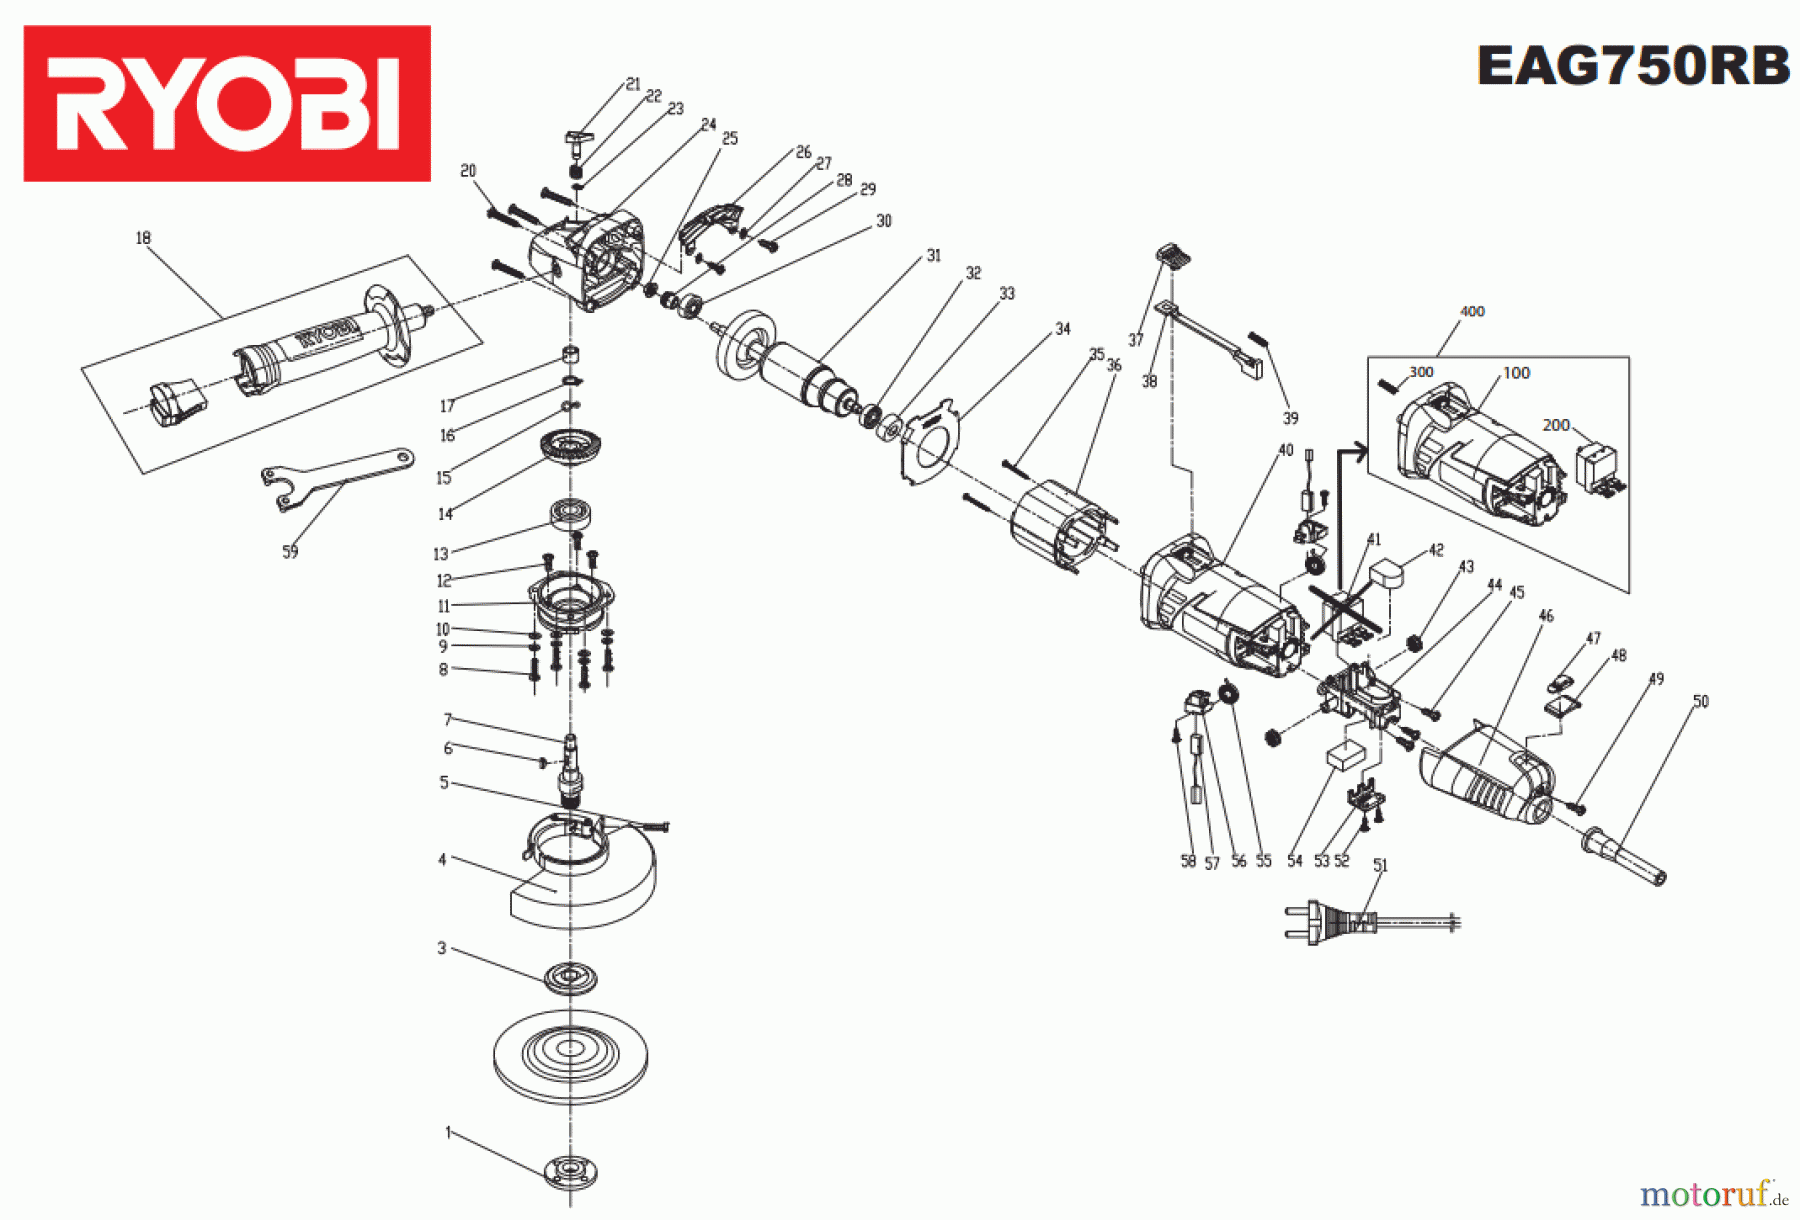  Ryobi Schleifgeräte Winkelschleifgerät EAG750RB Seite 1